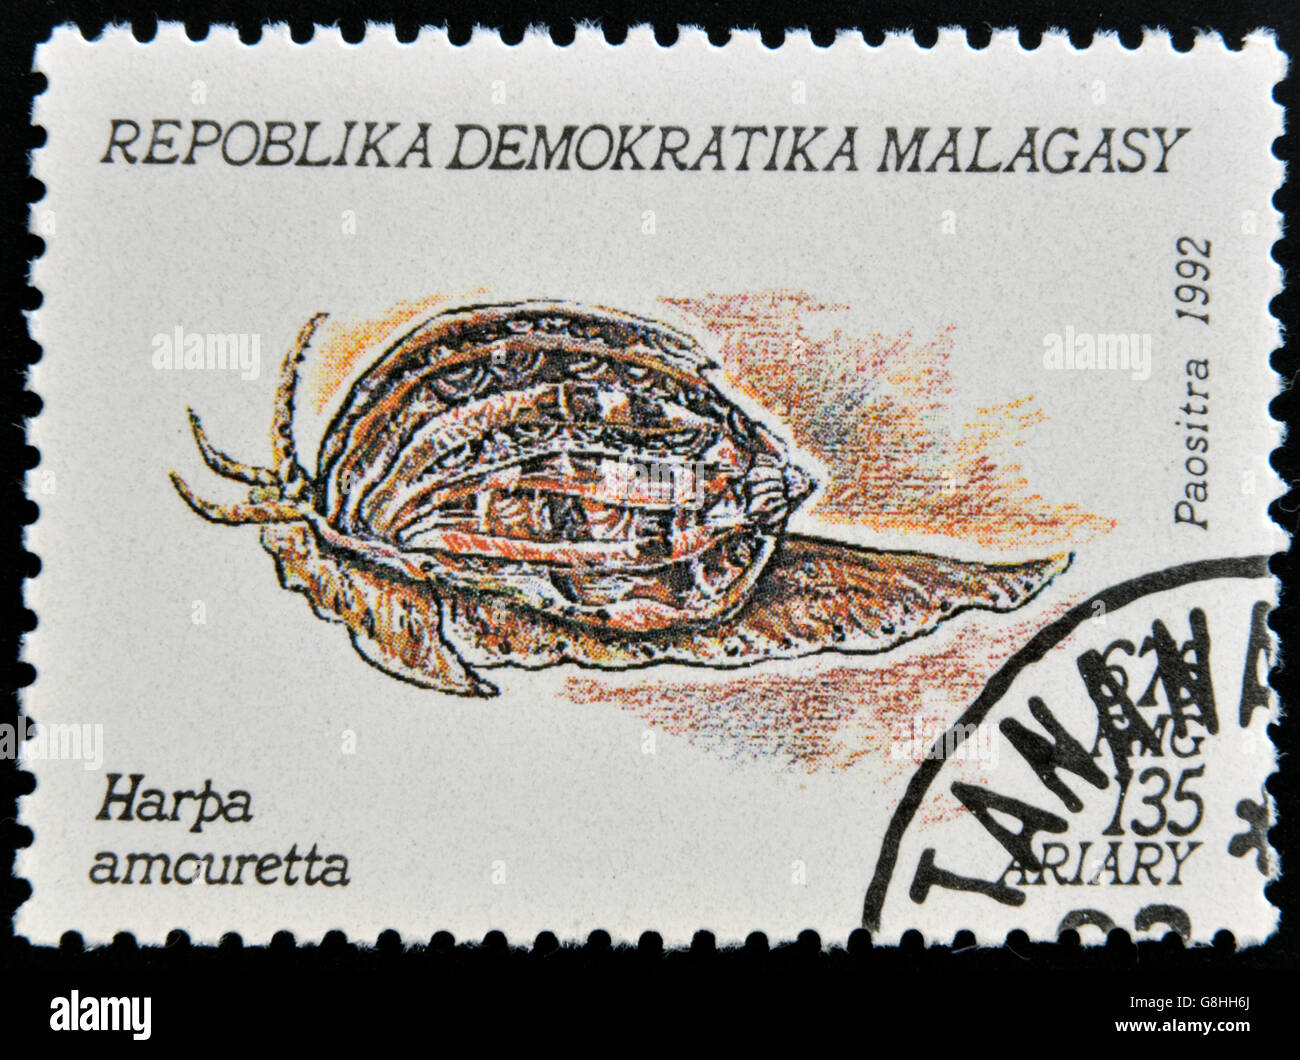 MADAGASCAR - CIRCA 1992: A stamp printed in Madagacar shows harpa amouretta, circa 1992 Stock Photo